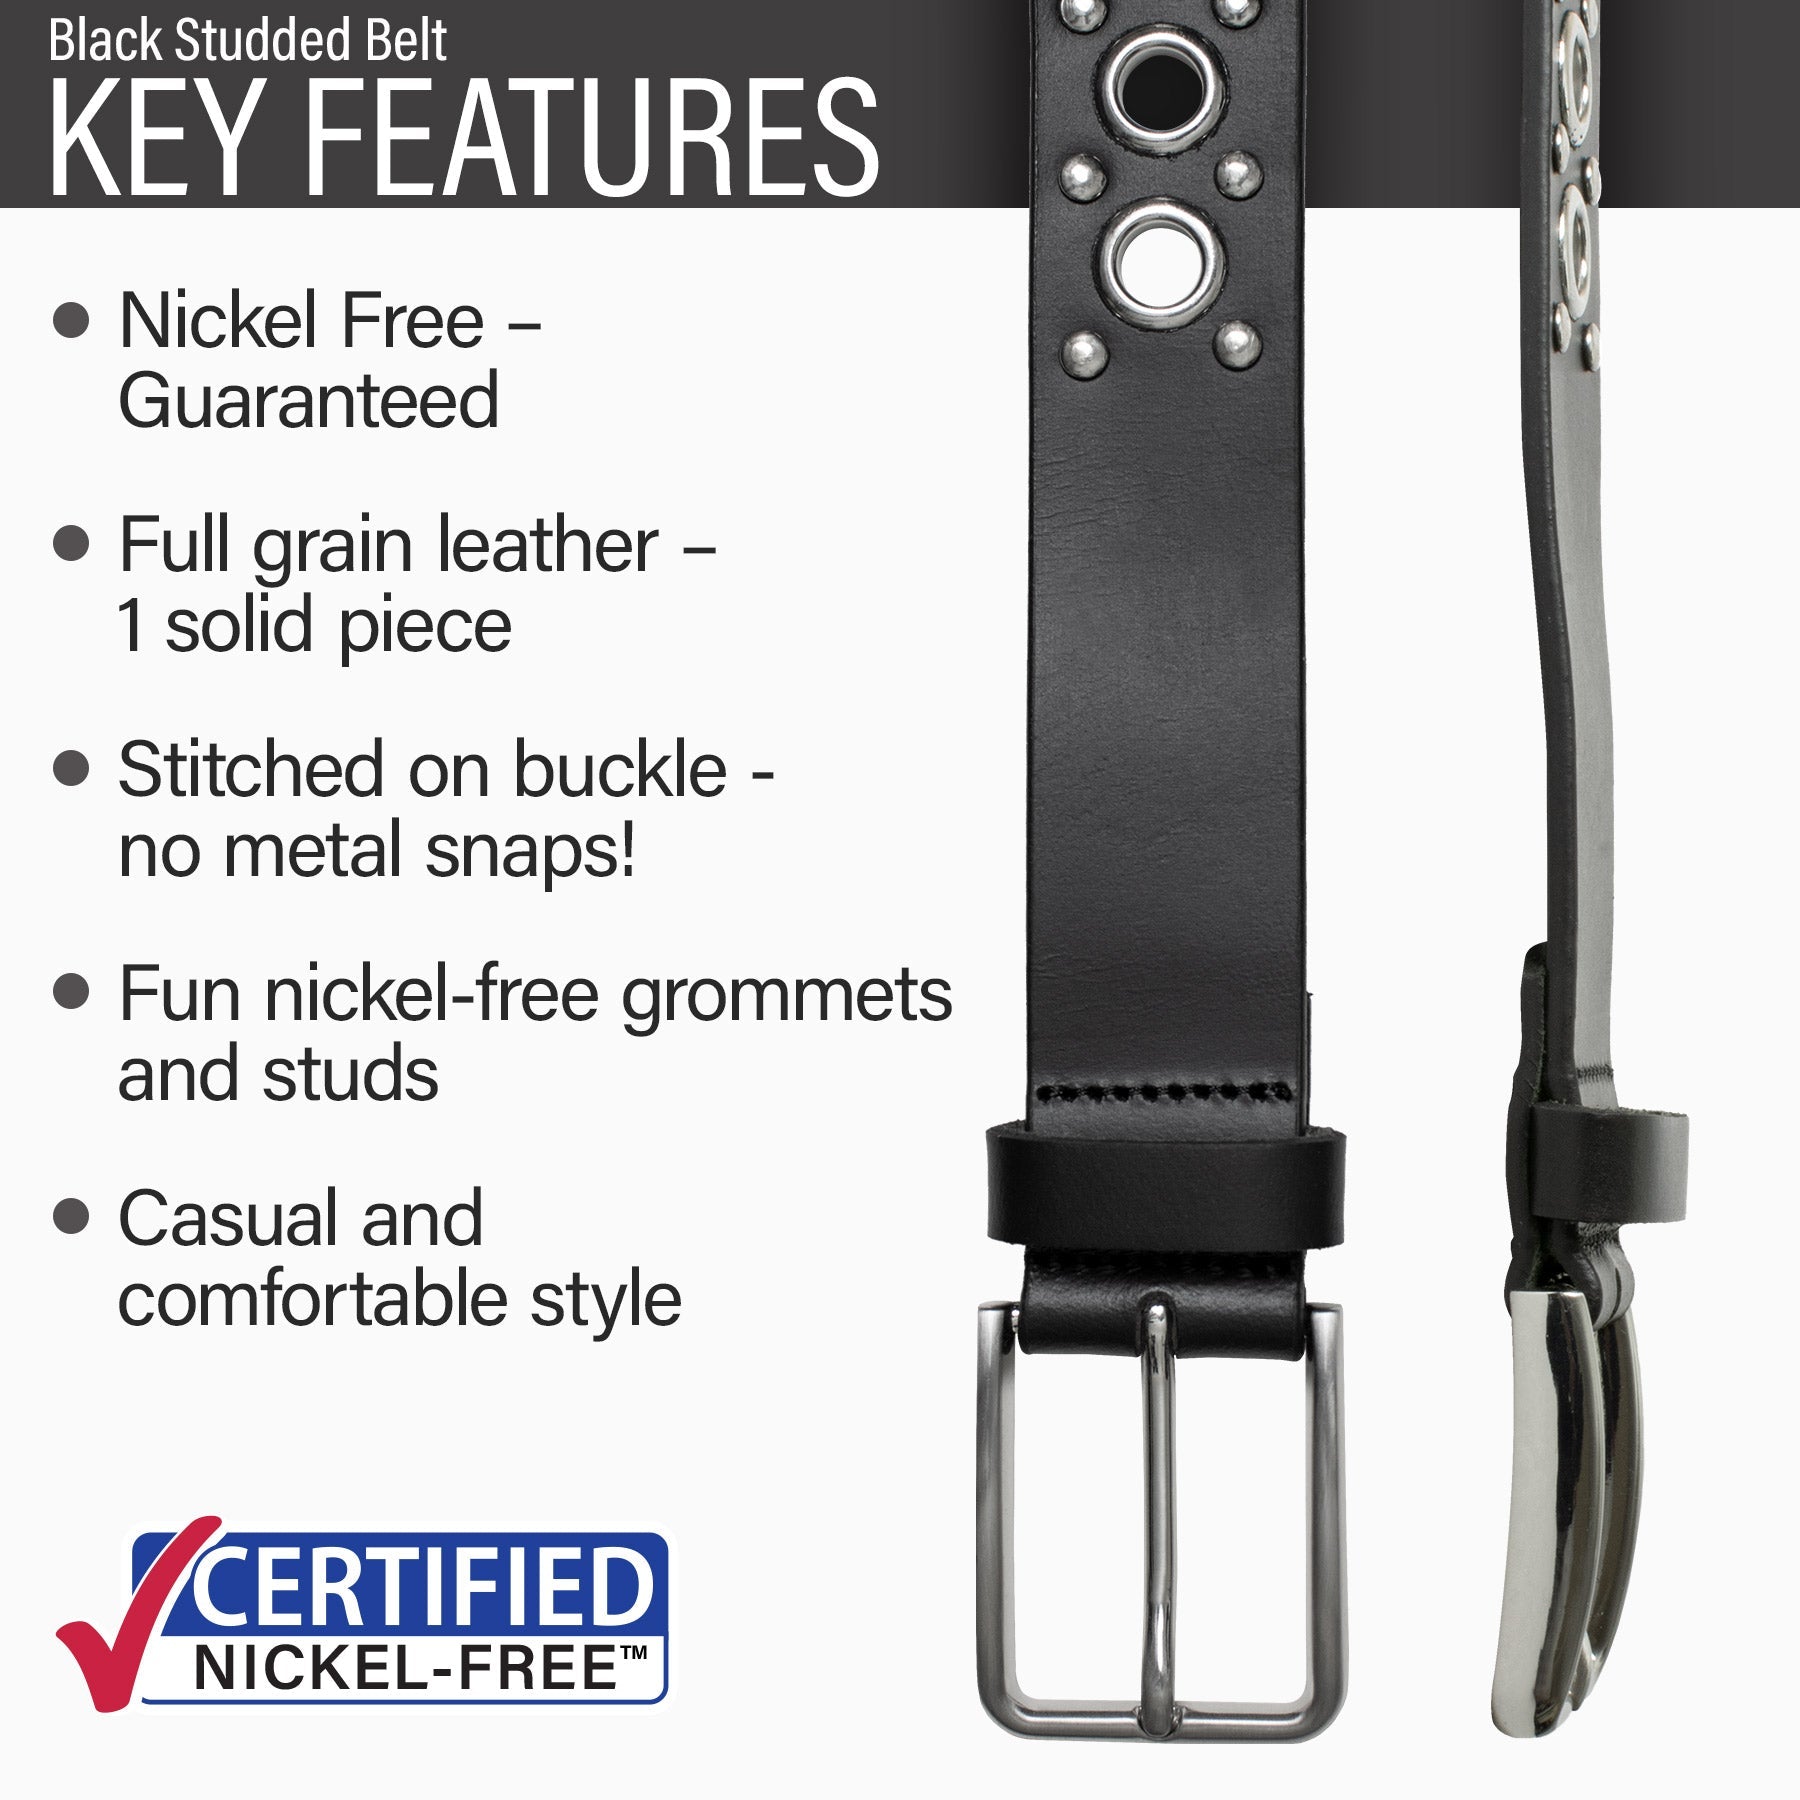 Low Profile Nickel Free Belt Buckle - Removable Nickel Free Buckle